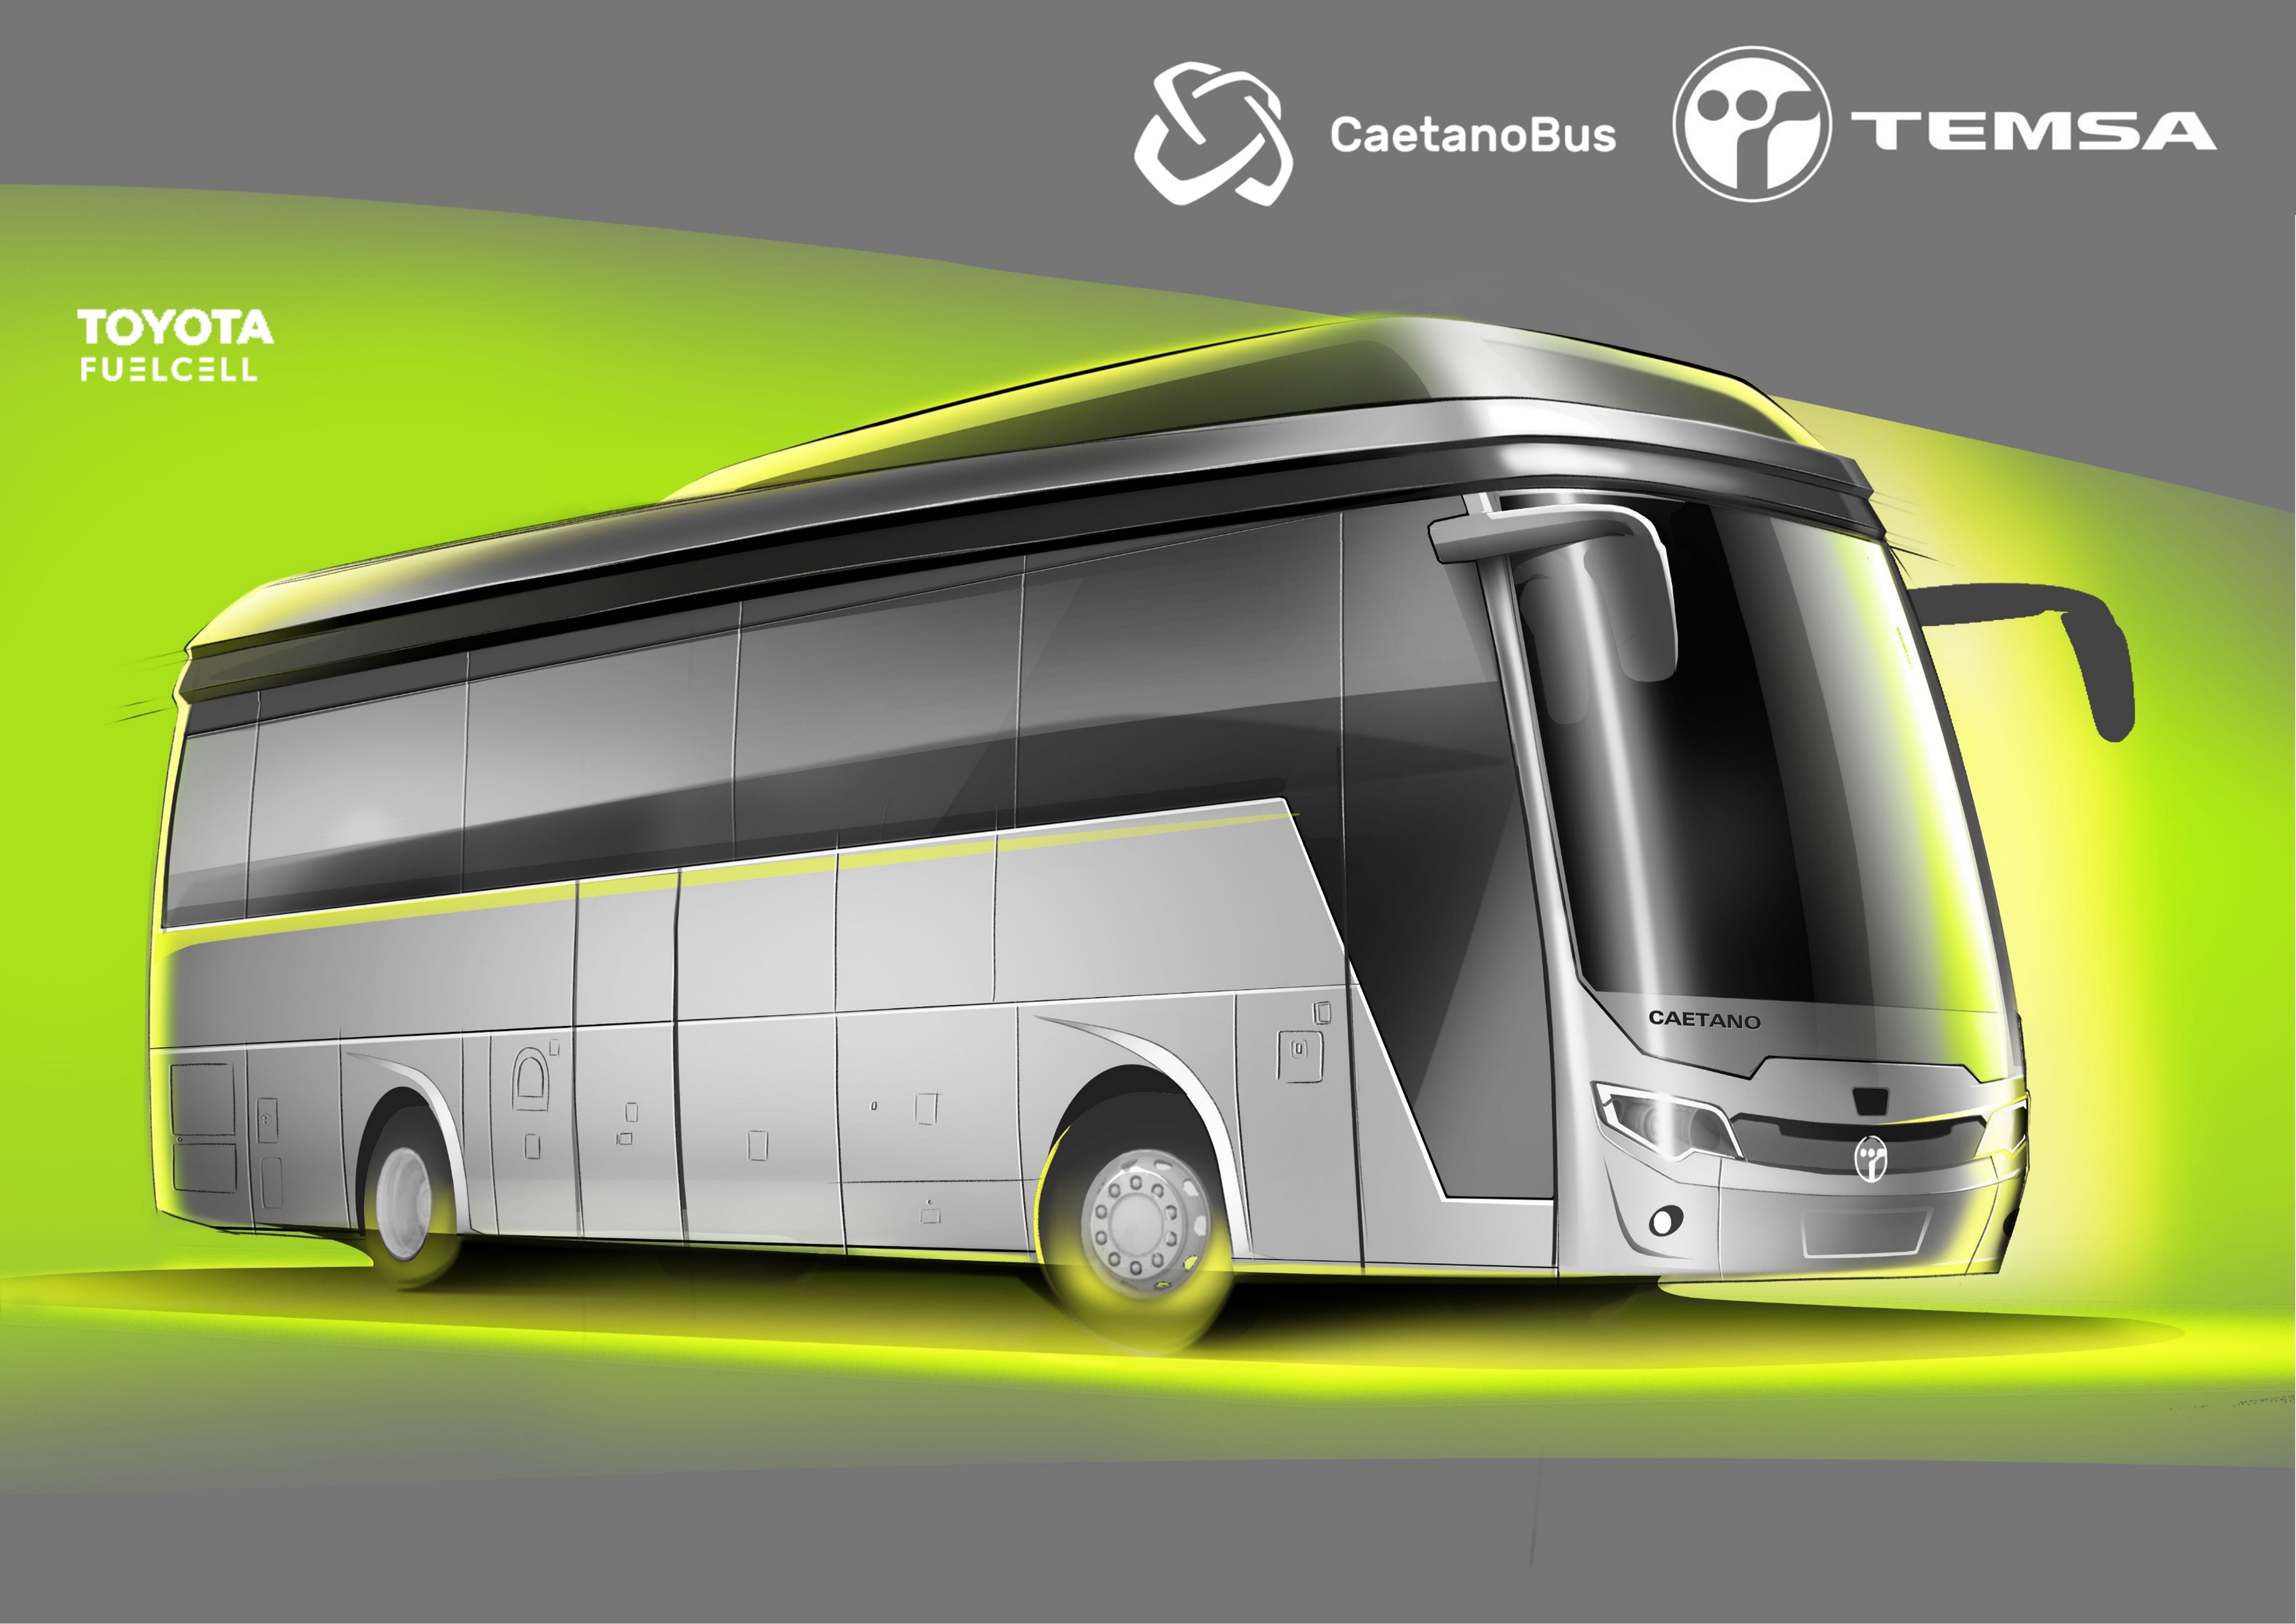 Caetano and Temsa agree to develop a hydrogen coach platform